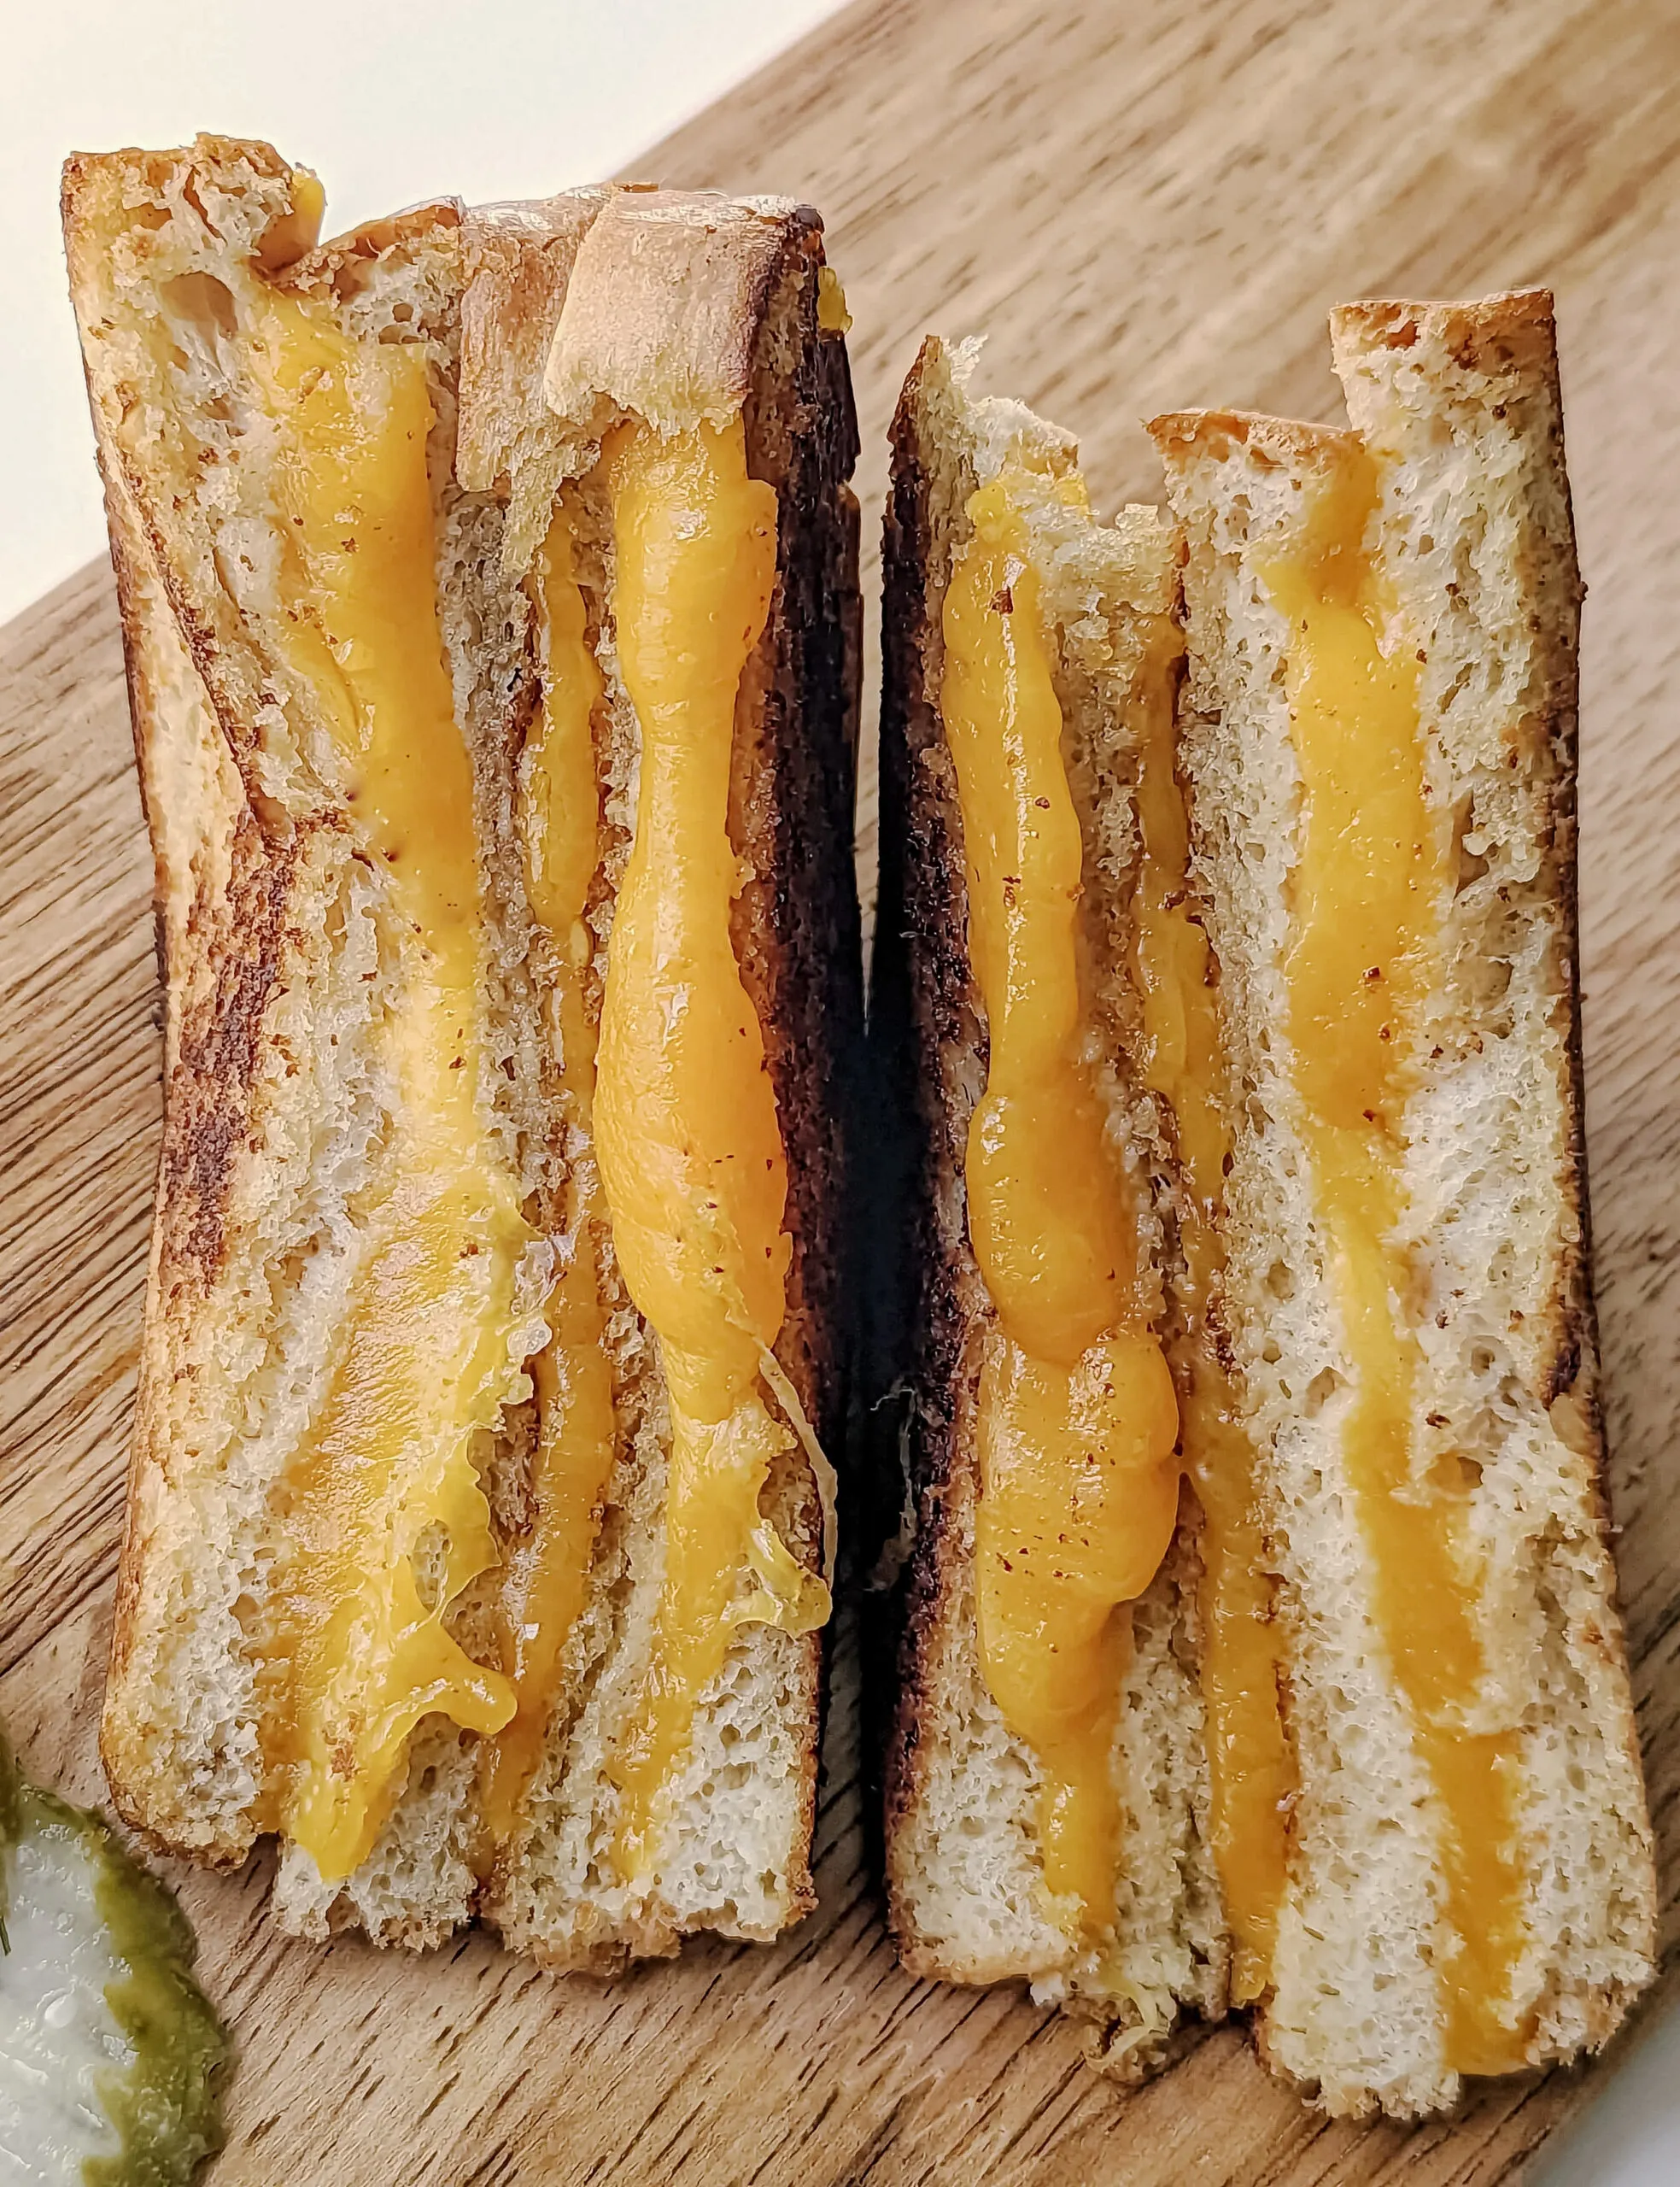 A grilled cheese sandwich cut in half.